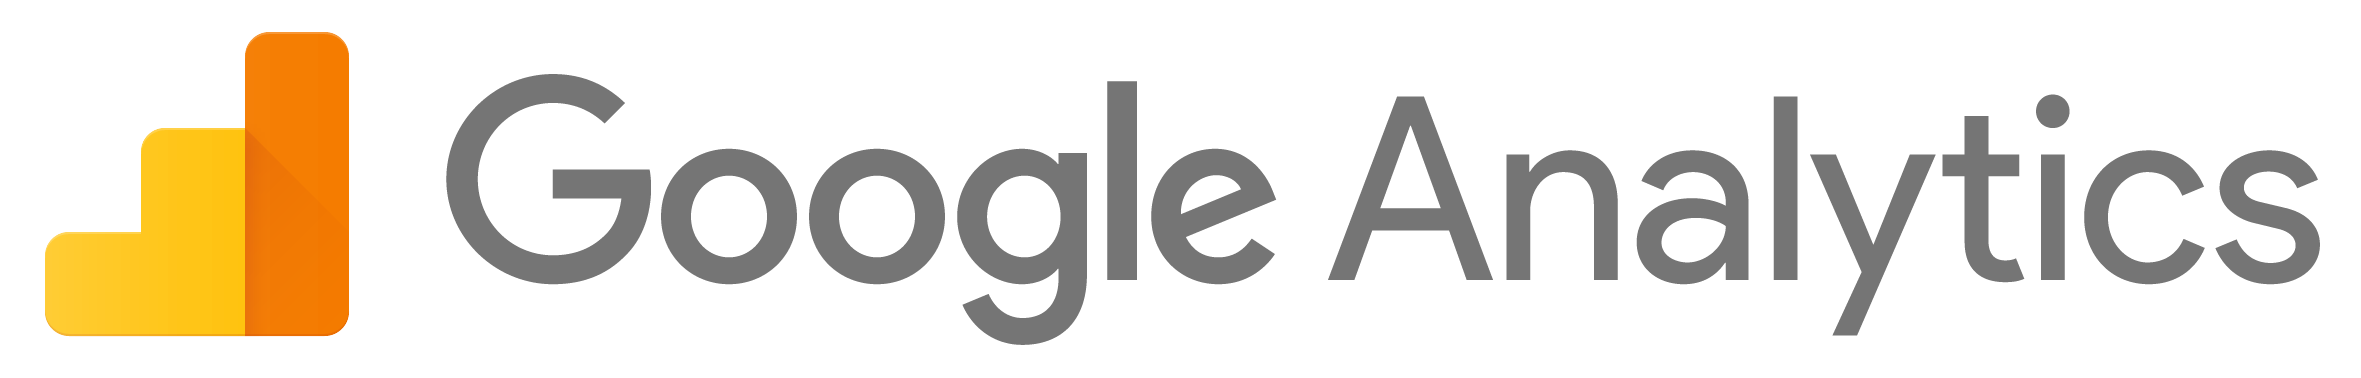 Google_Analytics_Logo_2015-300x48-1